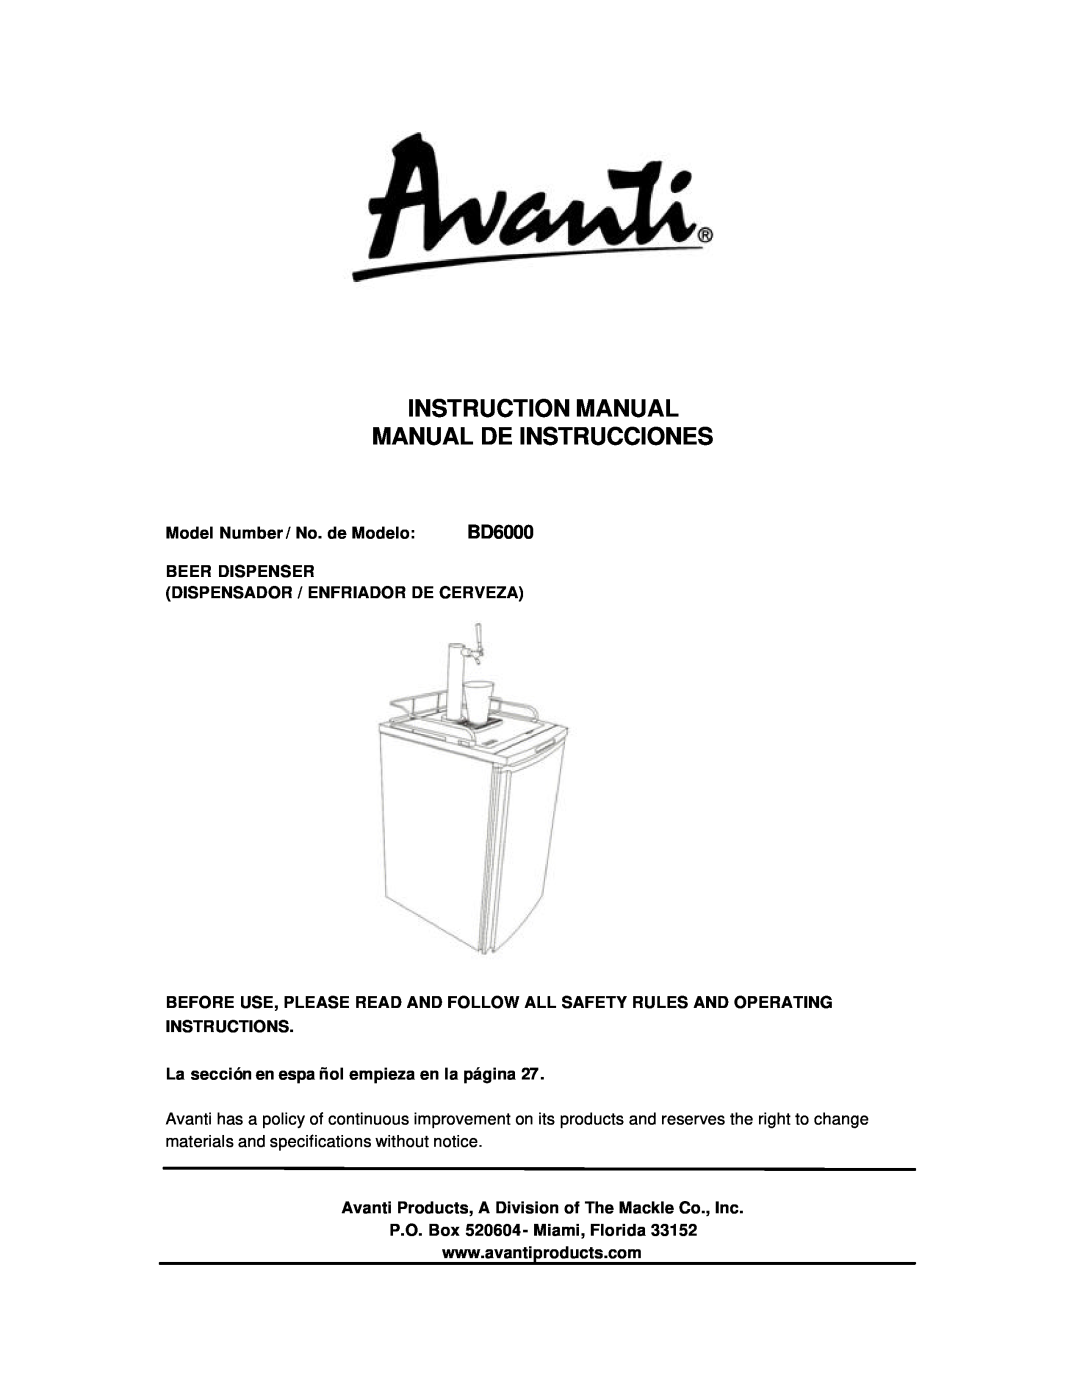 Avanti BD6000 instruction manual Model Number / No. de Modelo, Beer Dispenser Dispensador / Enfriador De Cerveza 